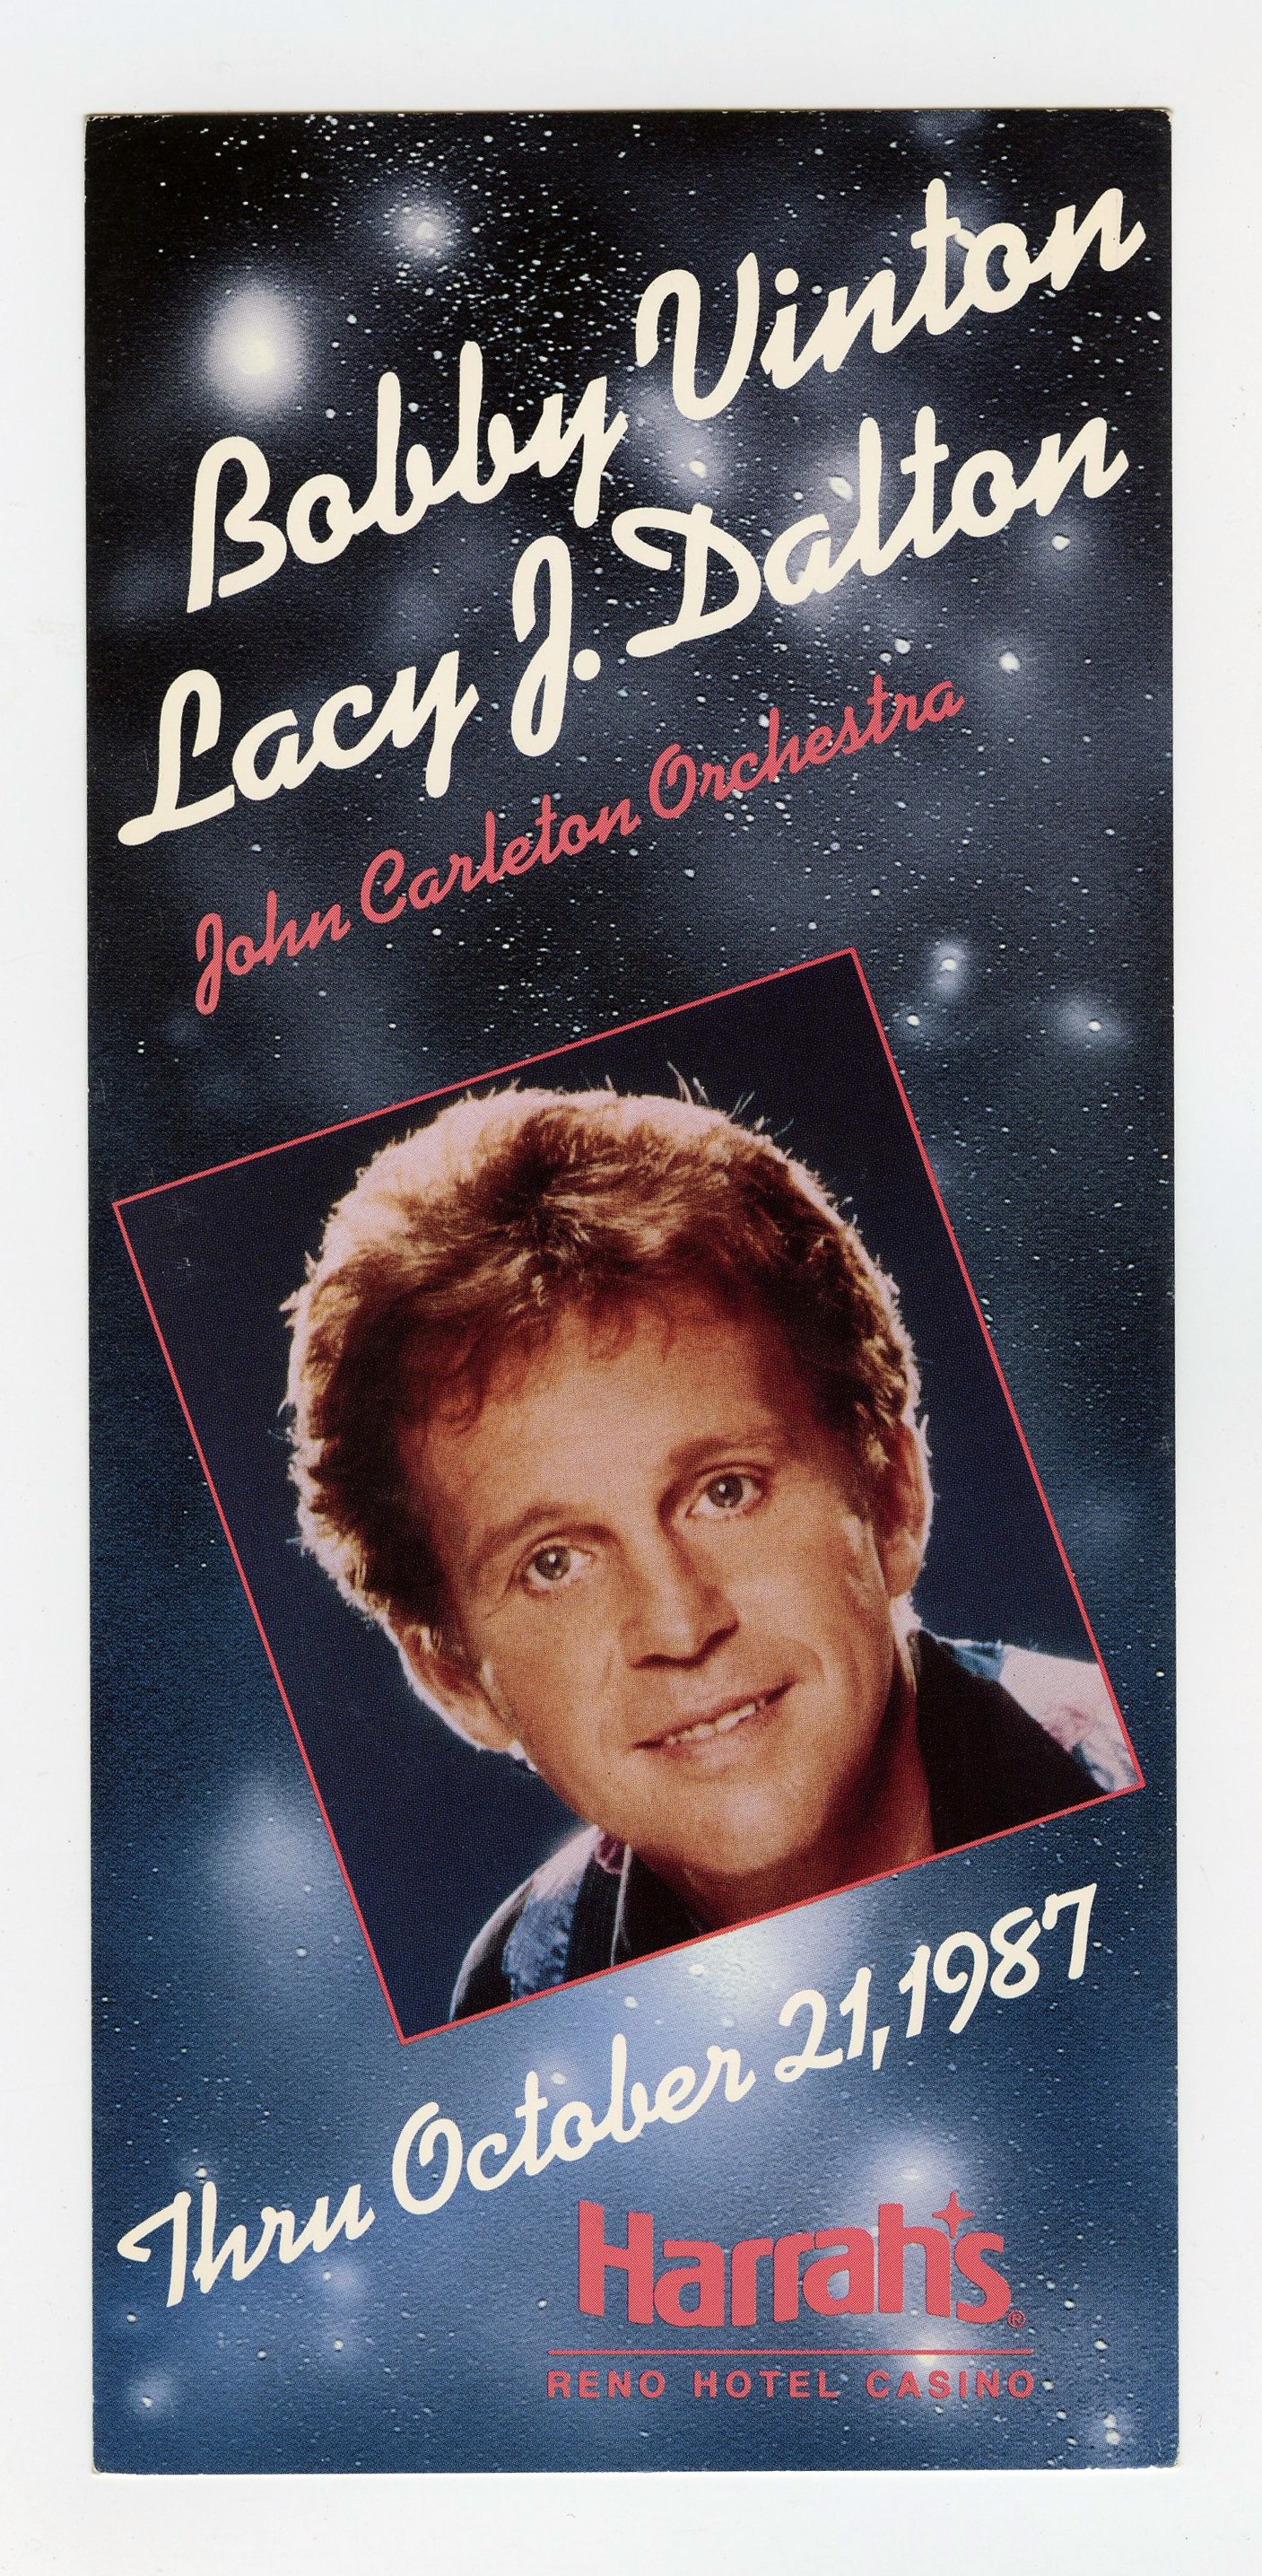 Bobby Vinton Postcard Lacy J. Dalton 1987 Oct 21 Reno Harrah's